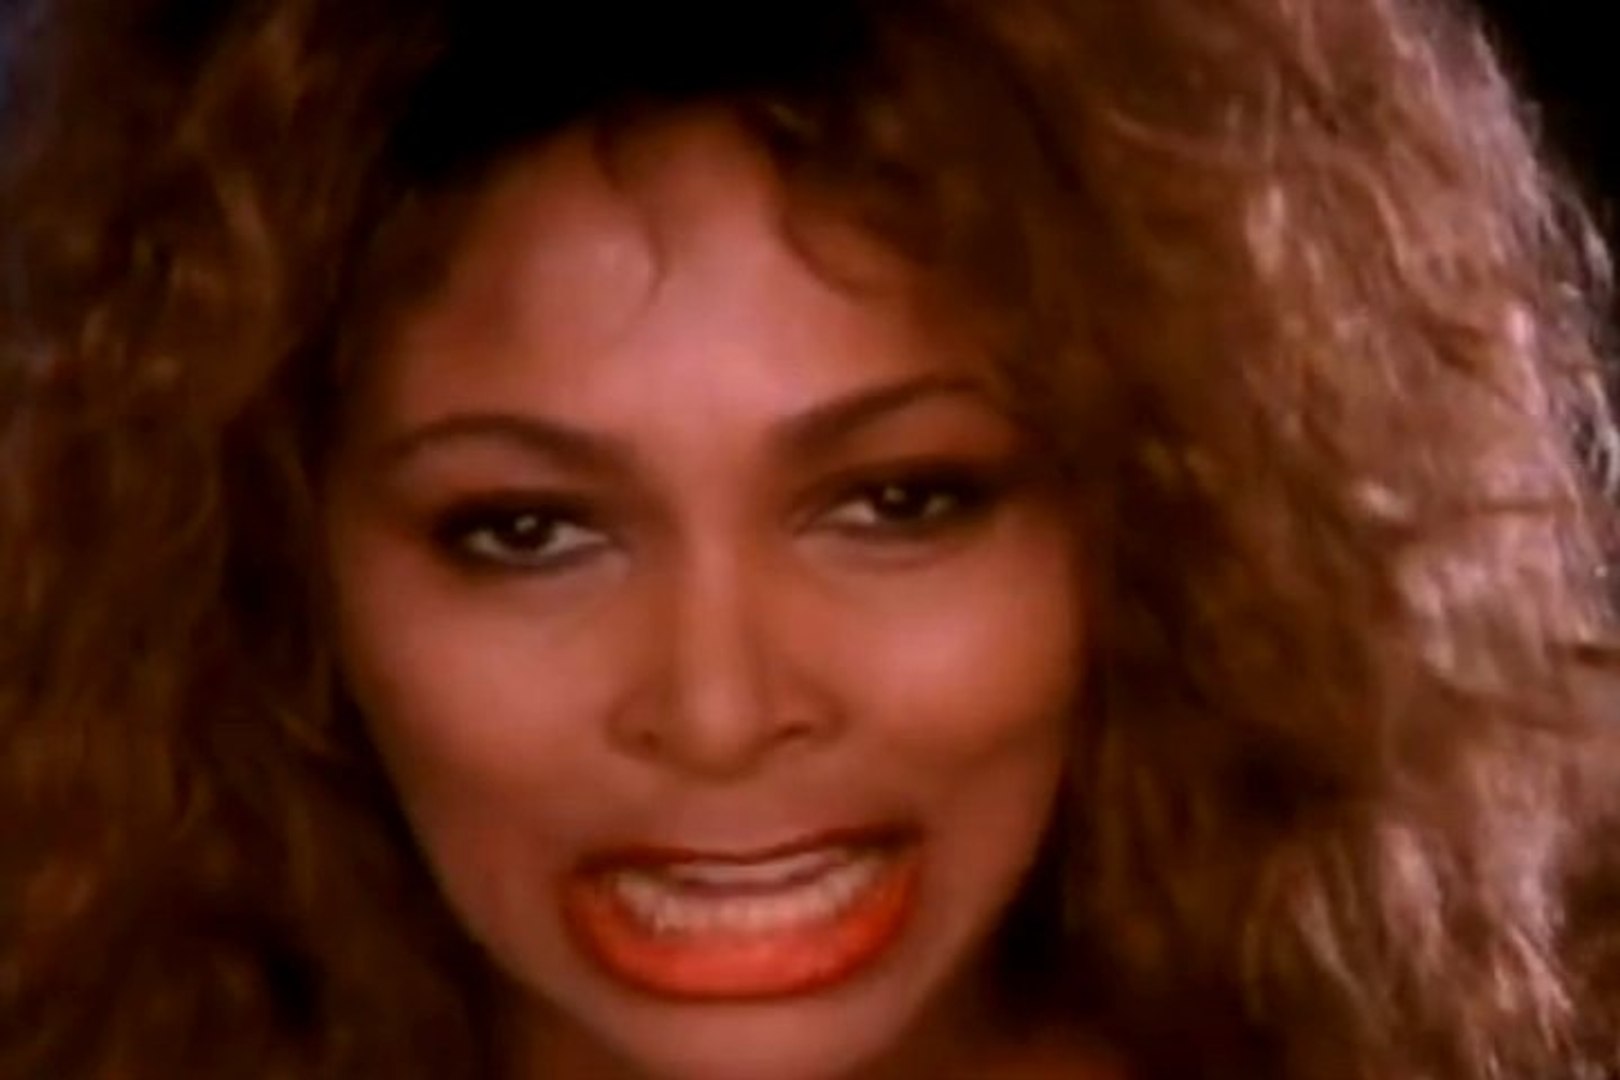 Слушать тернер бест. Tina Turner simply the best 1991.